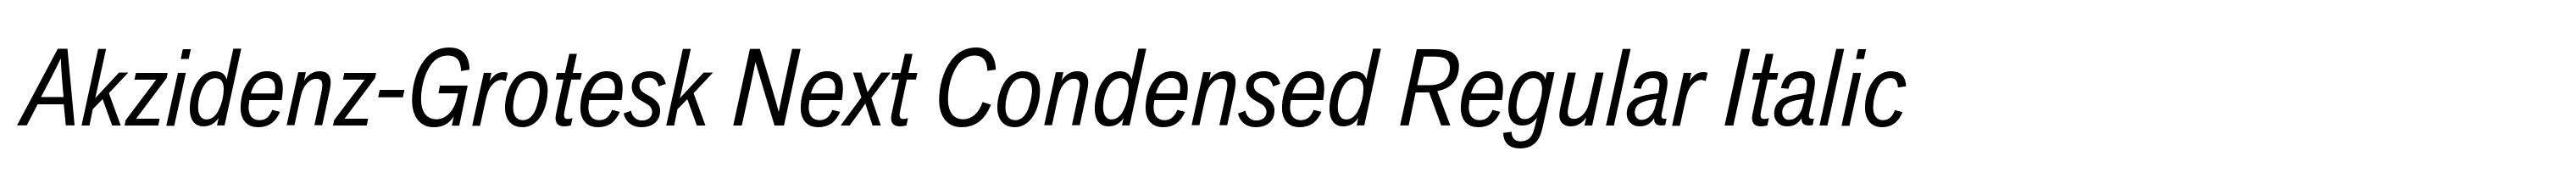 Akzidenz-Grotesk Next Condensed Regular Italic